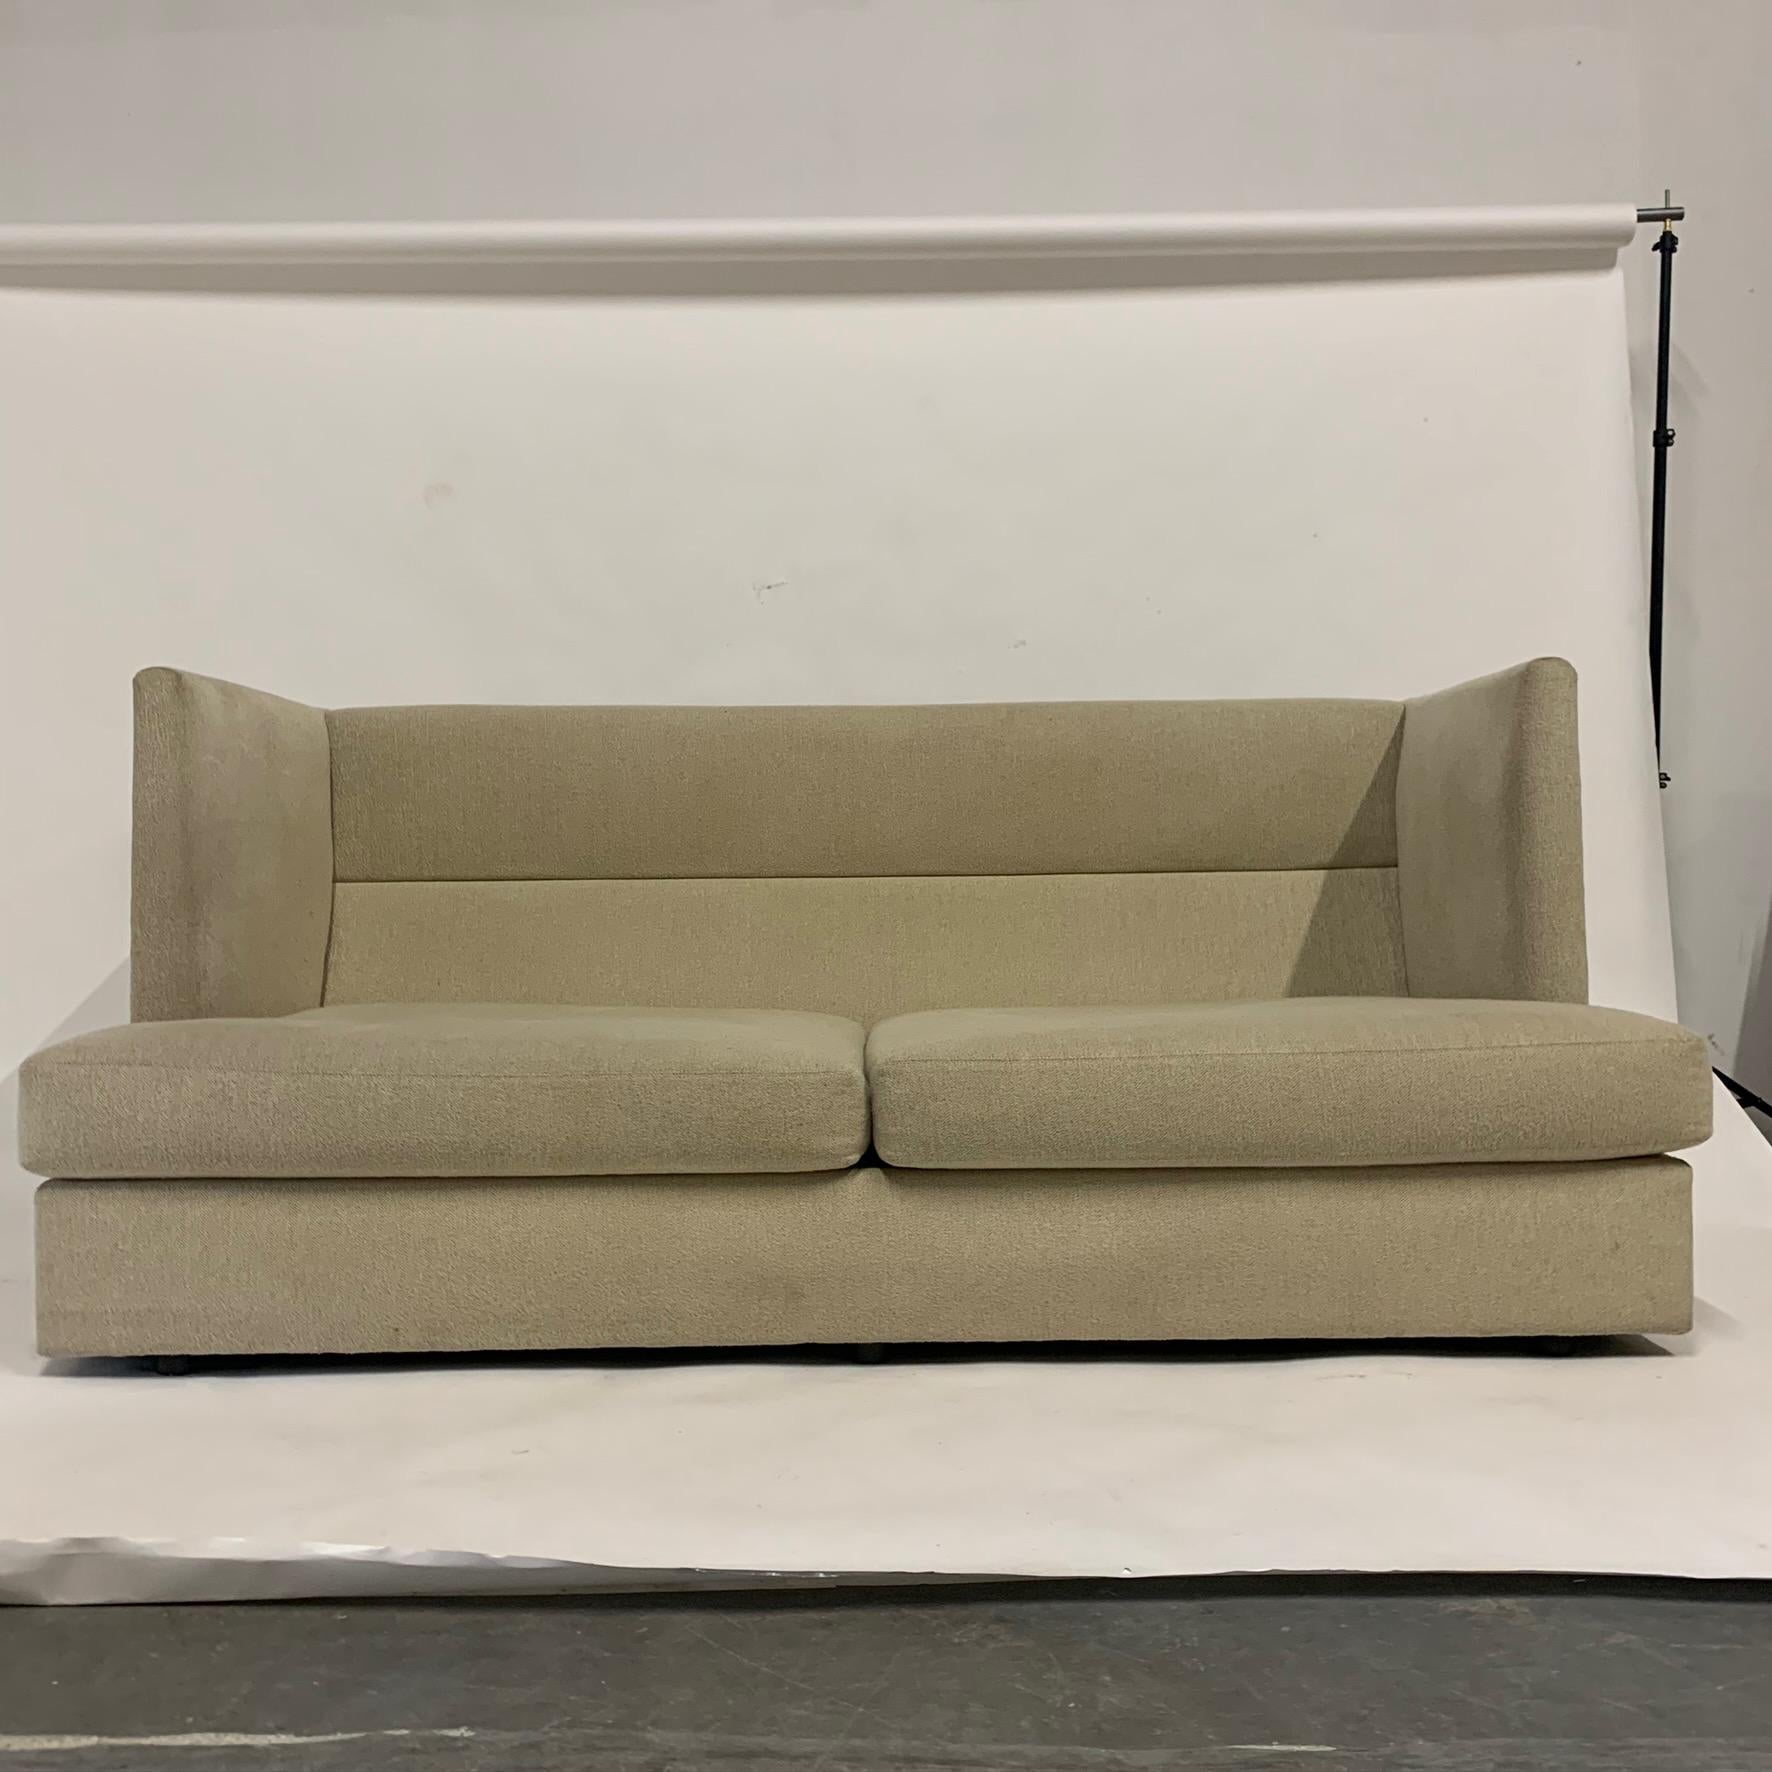 Contemporary Stunning Milo Baughman Shelter Sofa w Down Pillows- Very Comfortable